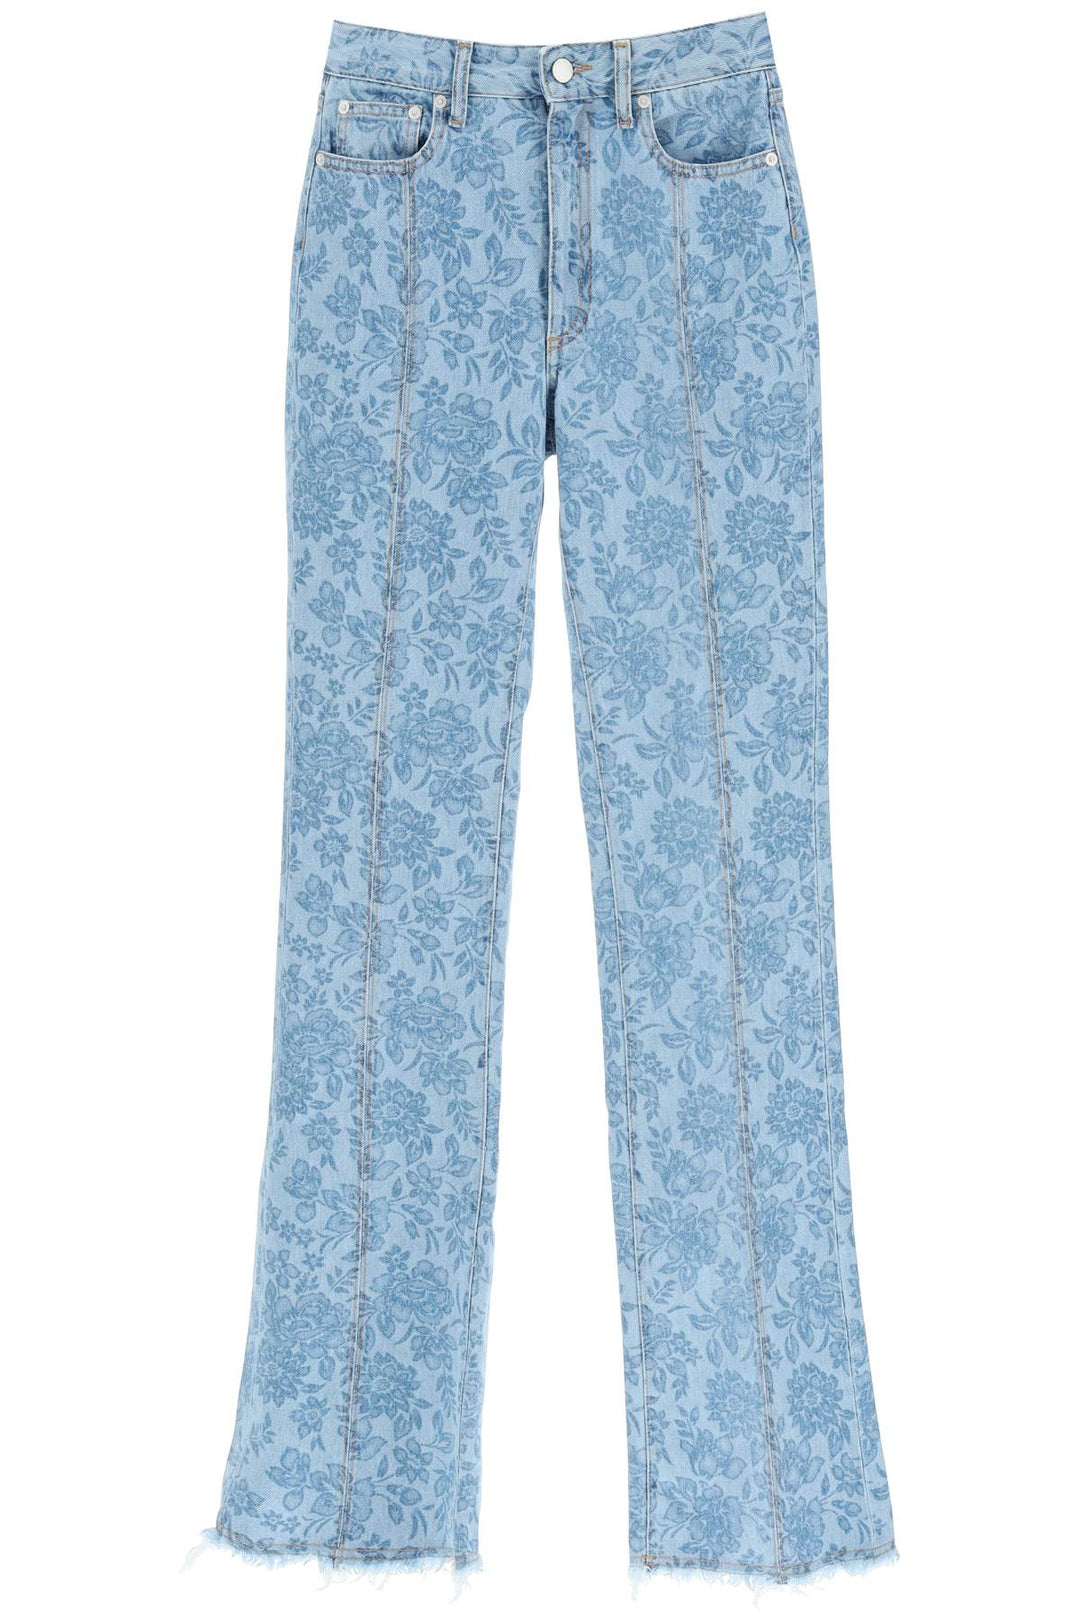 Alessandra Rich Flower Print Flared Jeans   Celeste